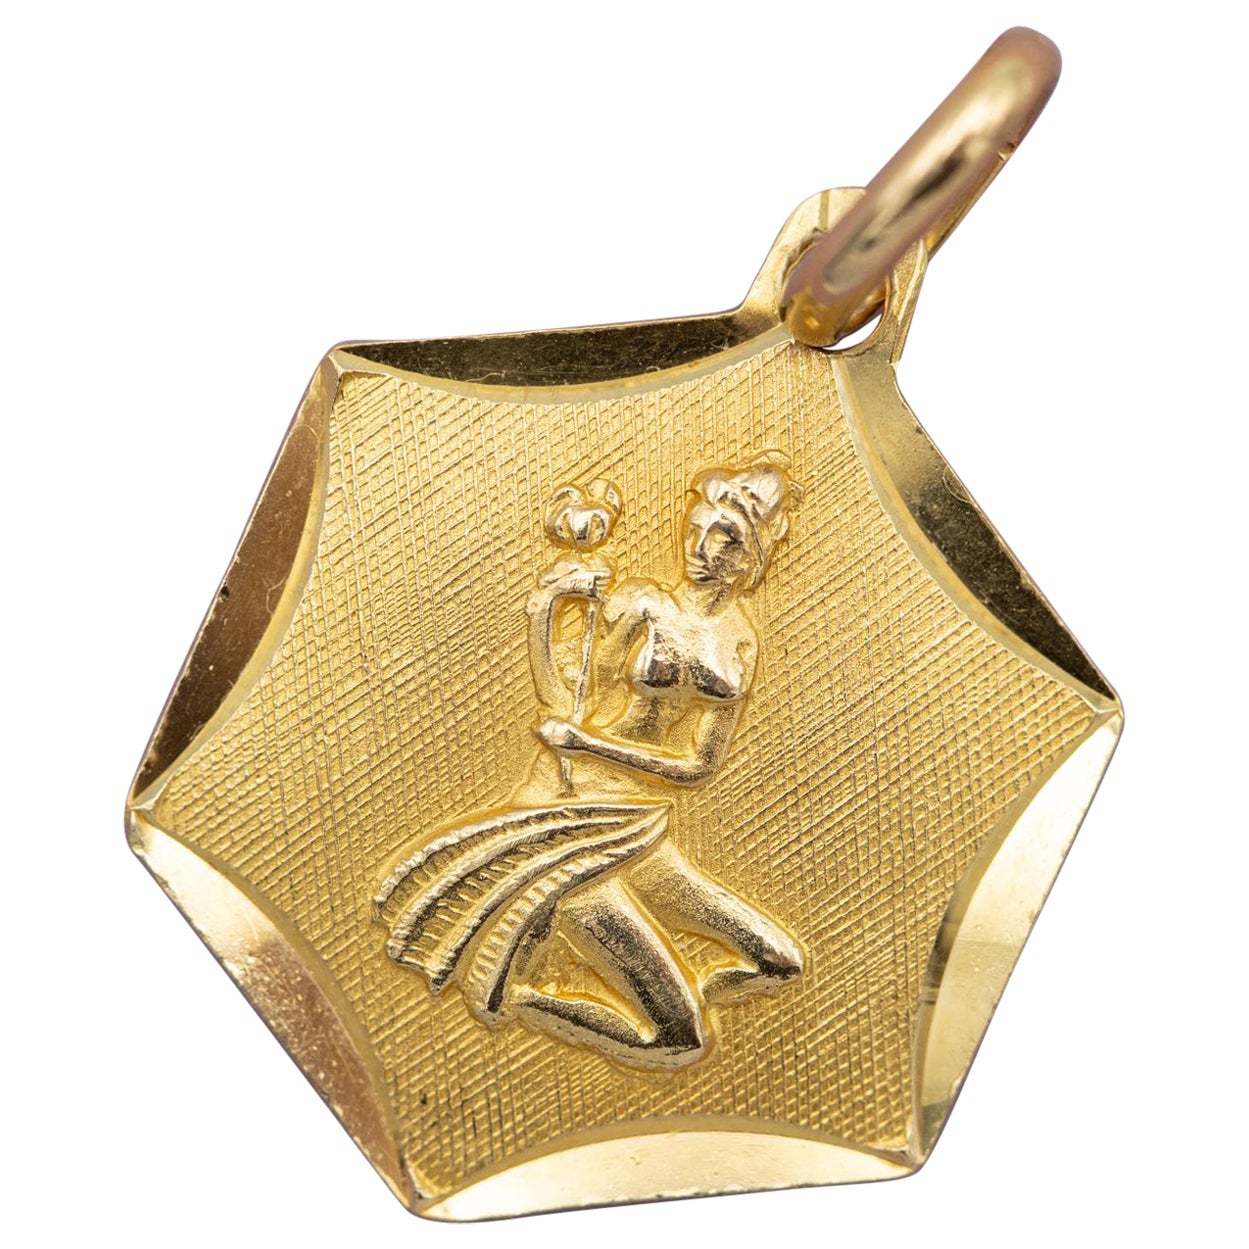 Vintage 18k zodiac charm pendant - Virgo charm - solid yellow gold - Star Sign